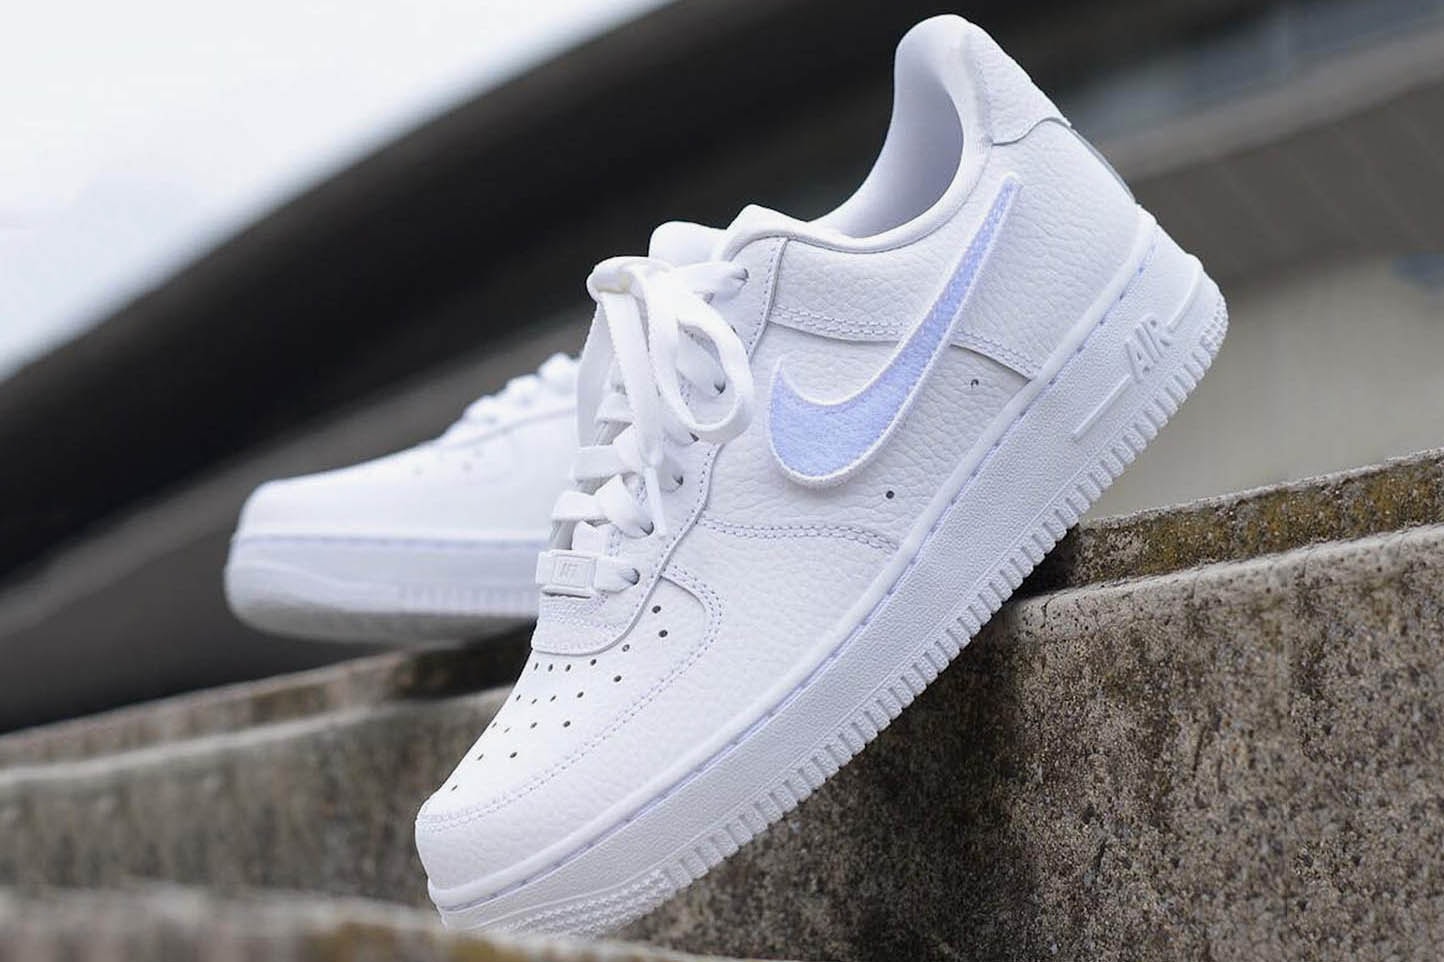 Nike Air Force 1 100 womens low may 12 japan release date info drop sneakers shoes footwear